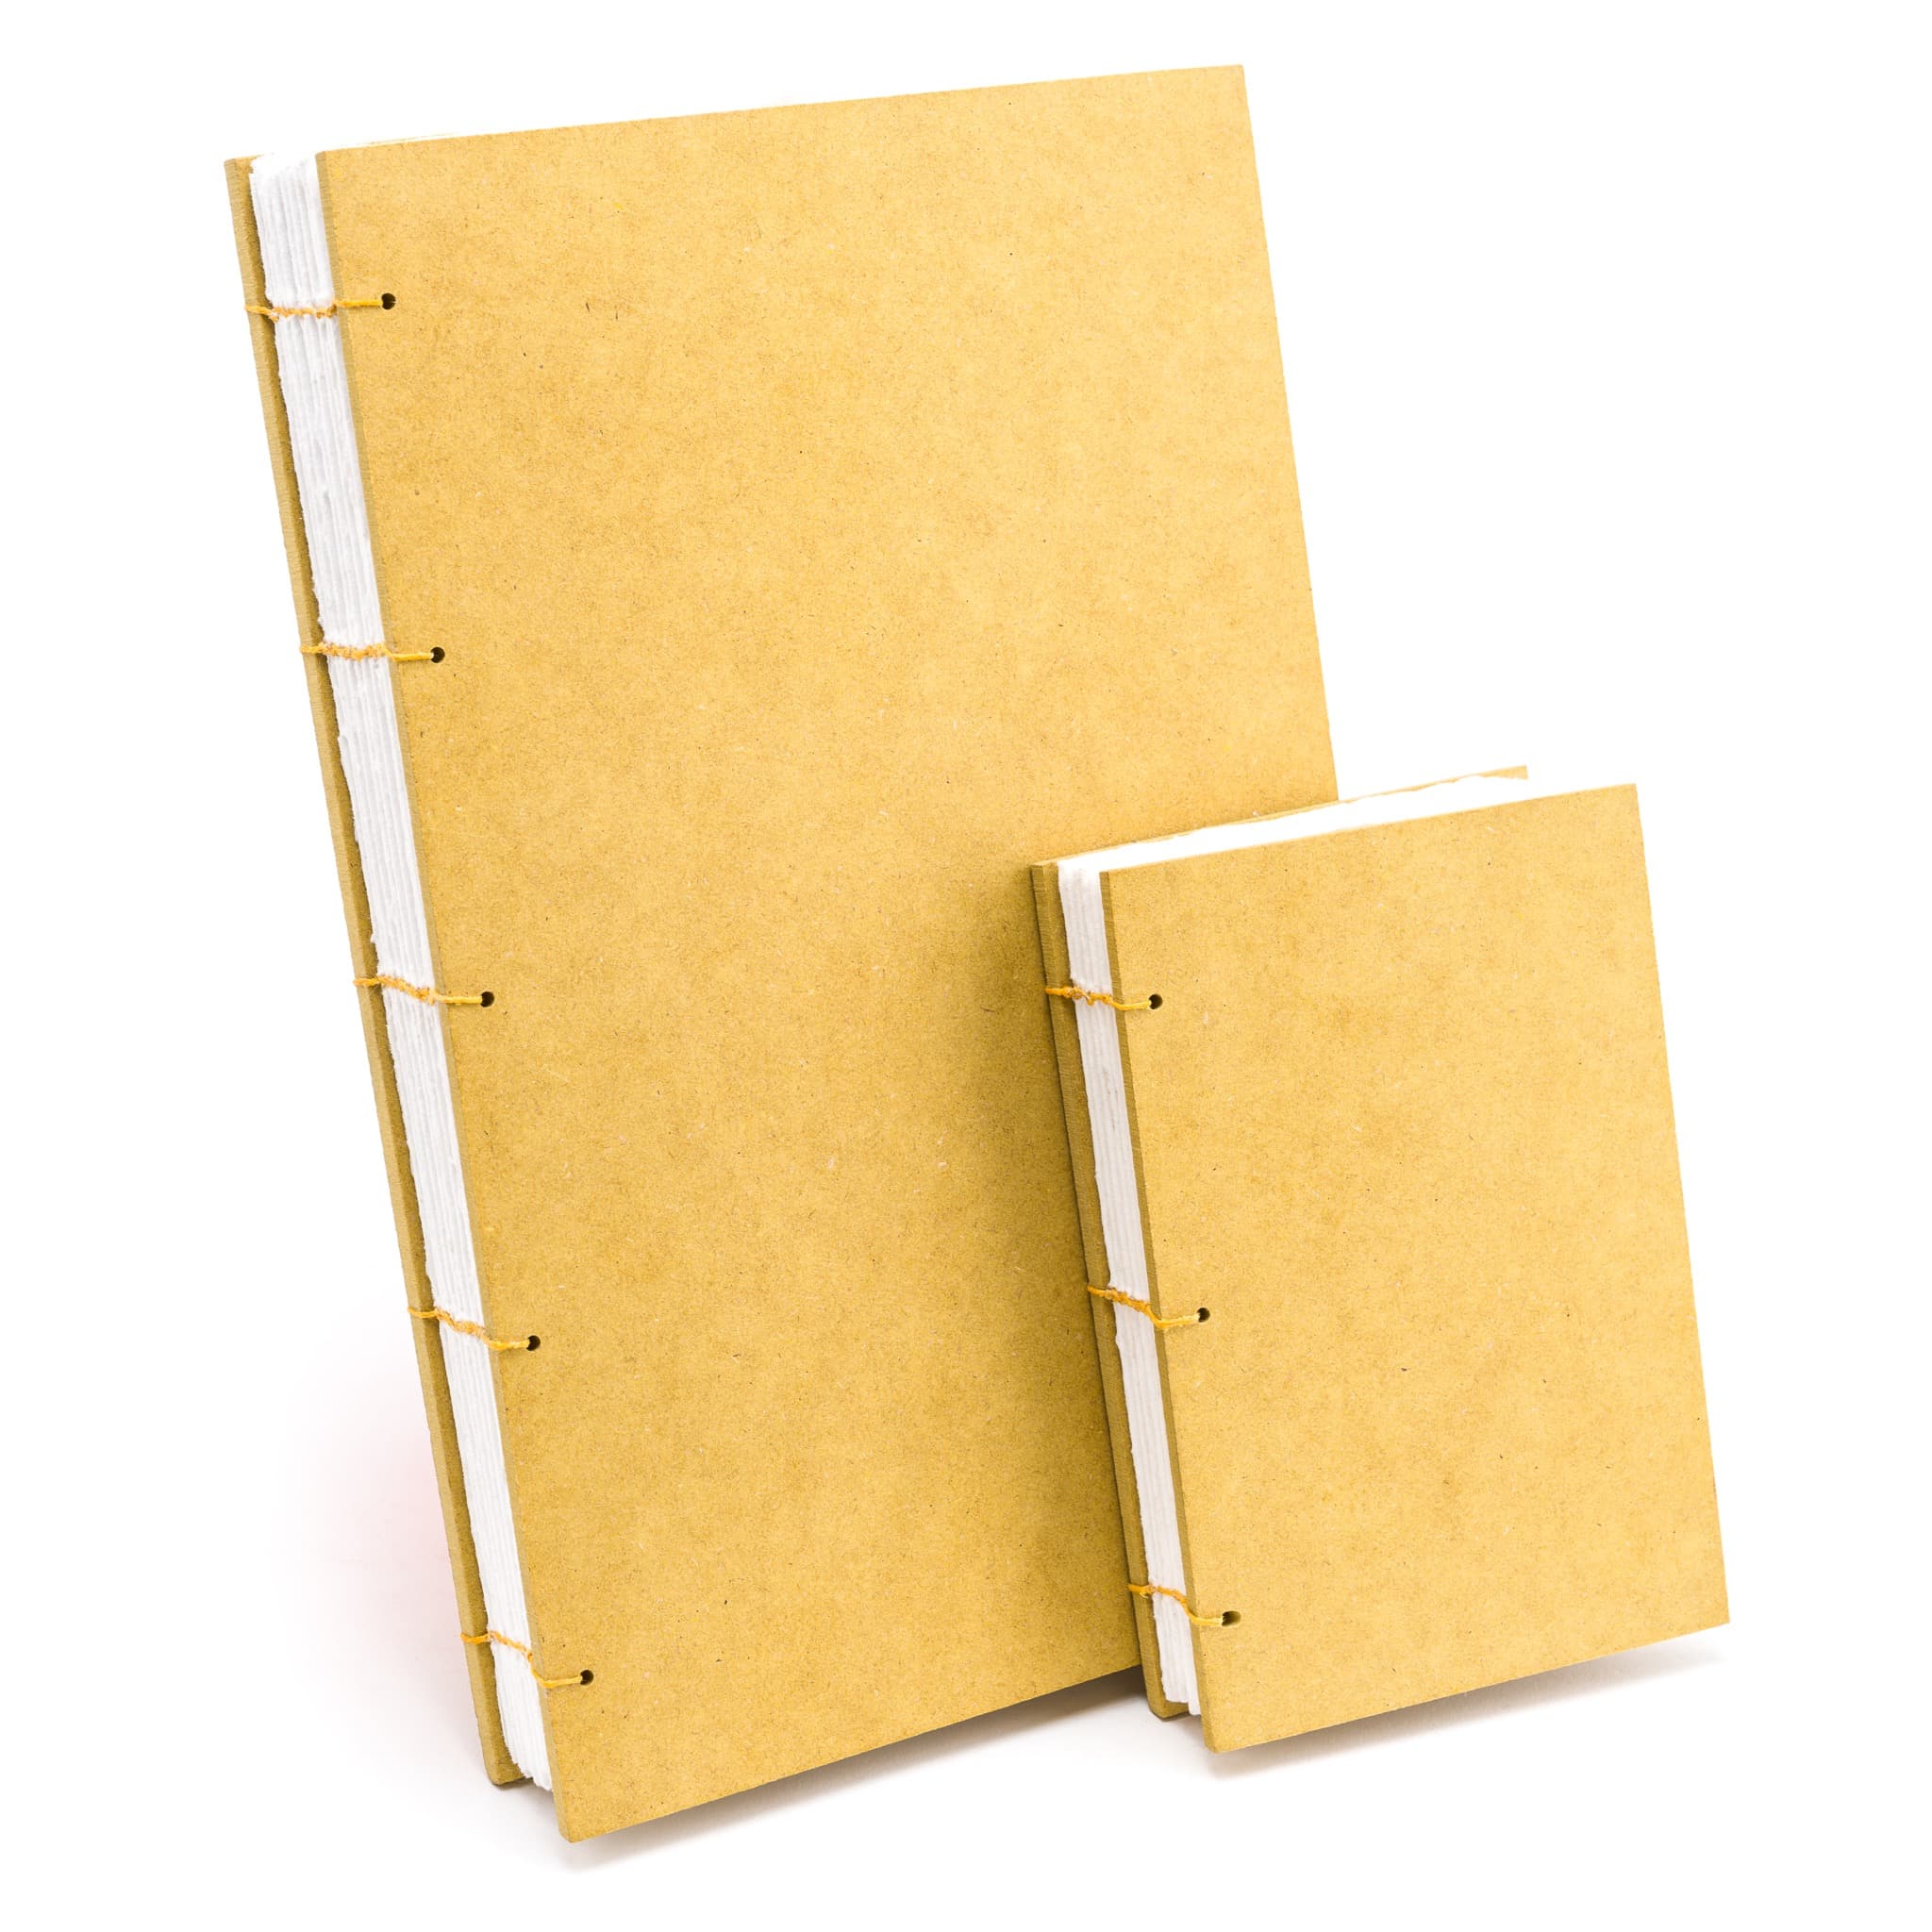 Amber handmade journal made with handmade 100% white cotton paper.